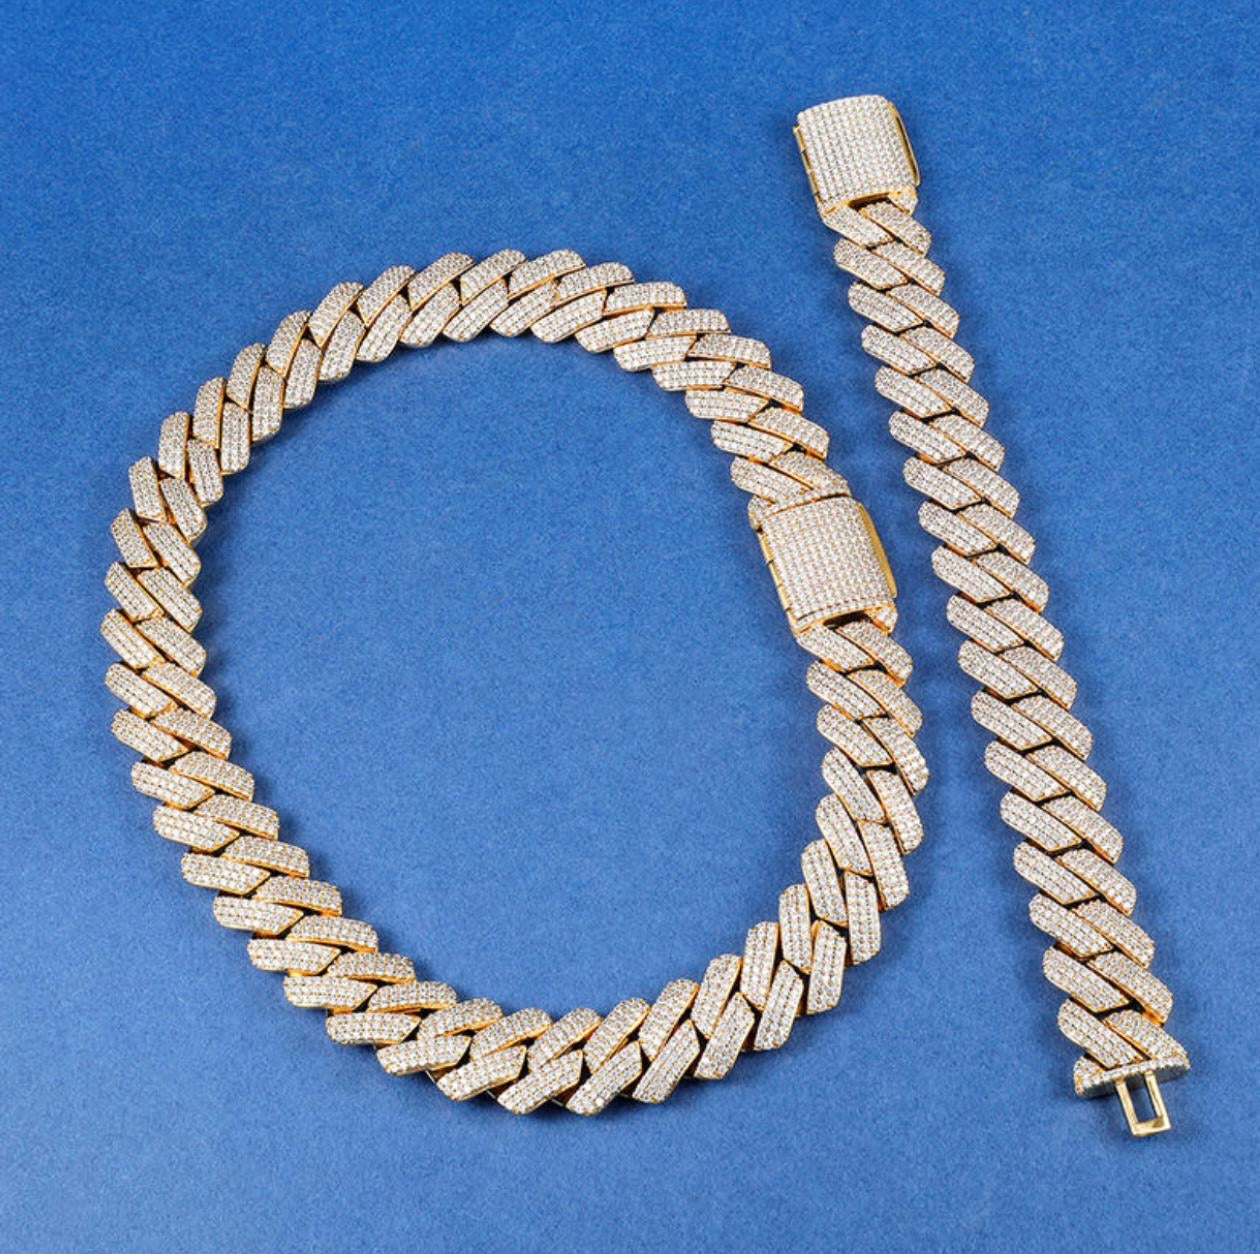 Cuban chain and bracelet